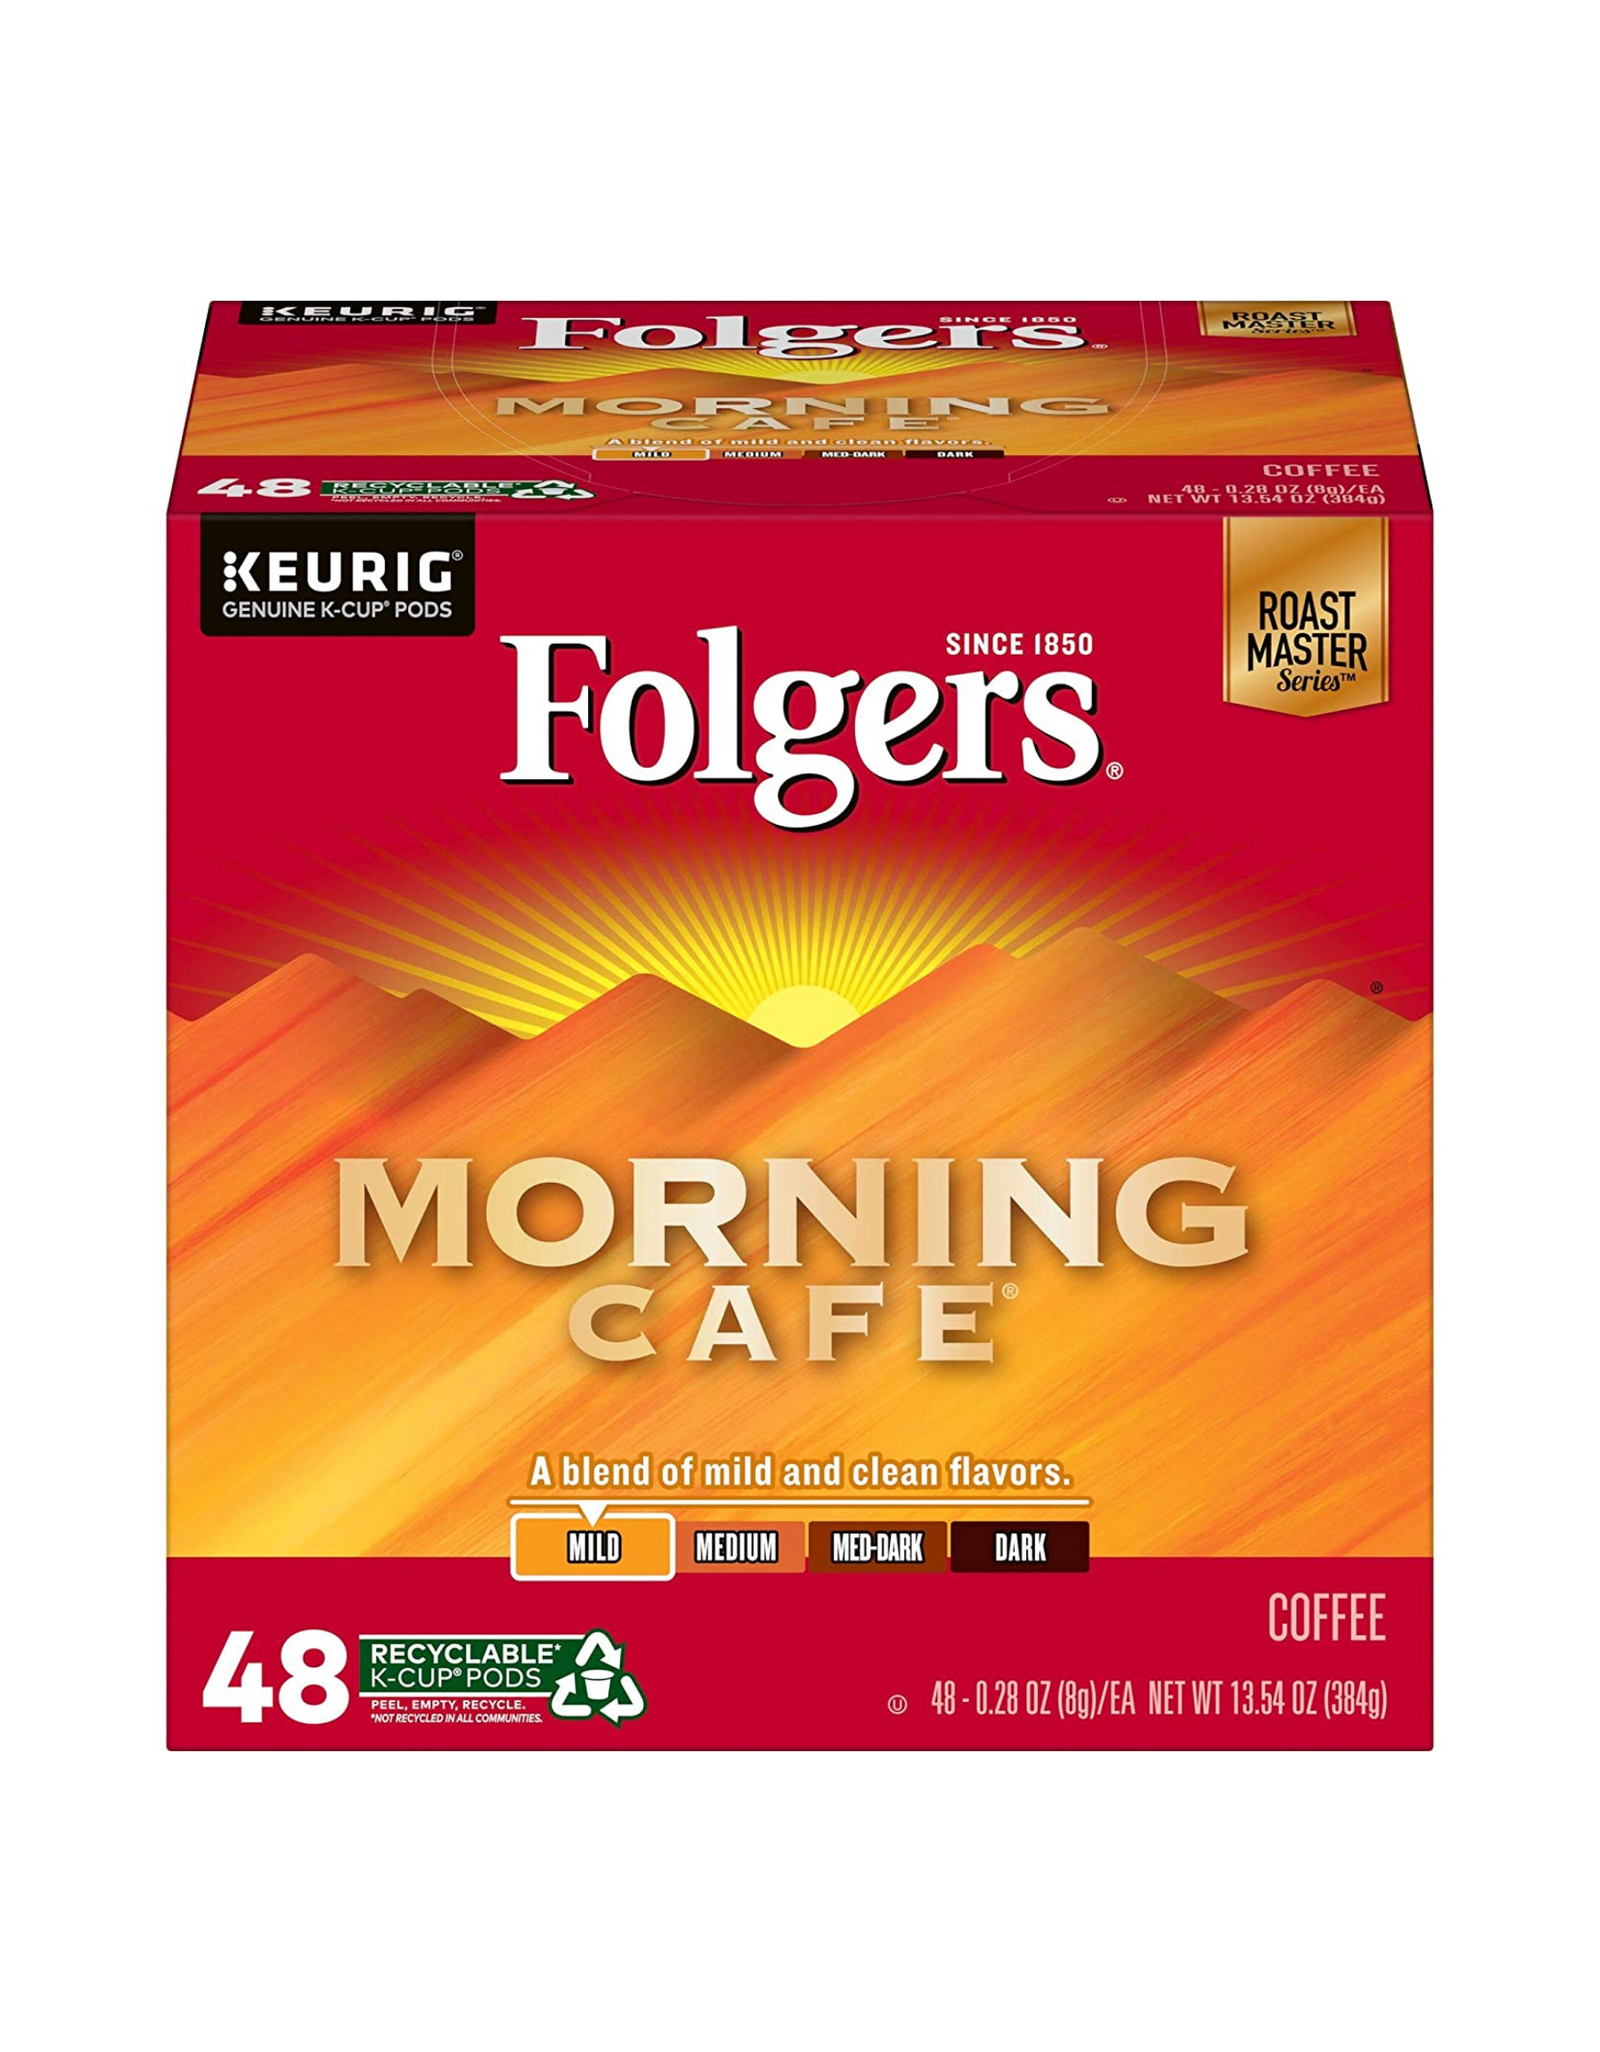 Folgers Morning Cafe Mild Roast Coffee, Keurig Genuine K-Cup Pod, 48 Ct (4 Boxes)